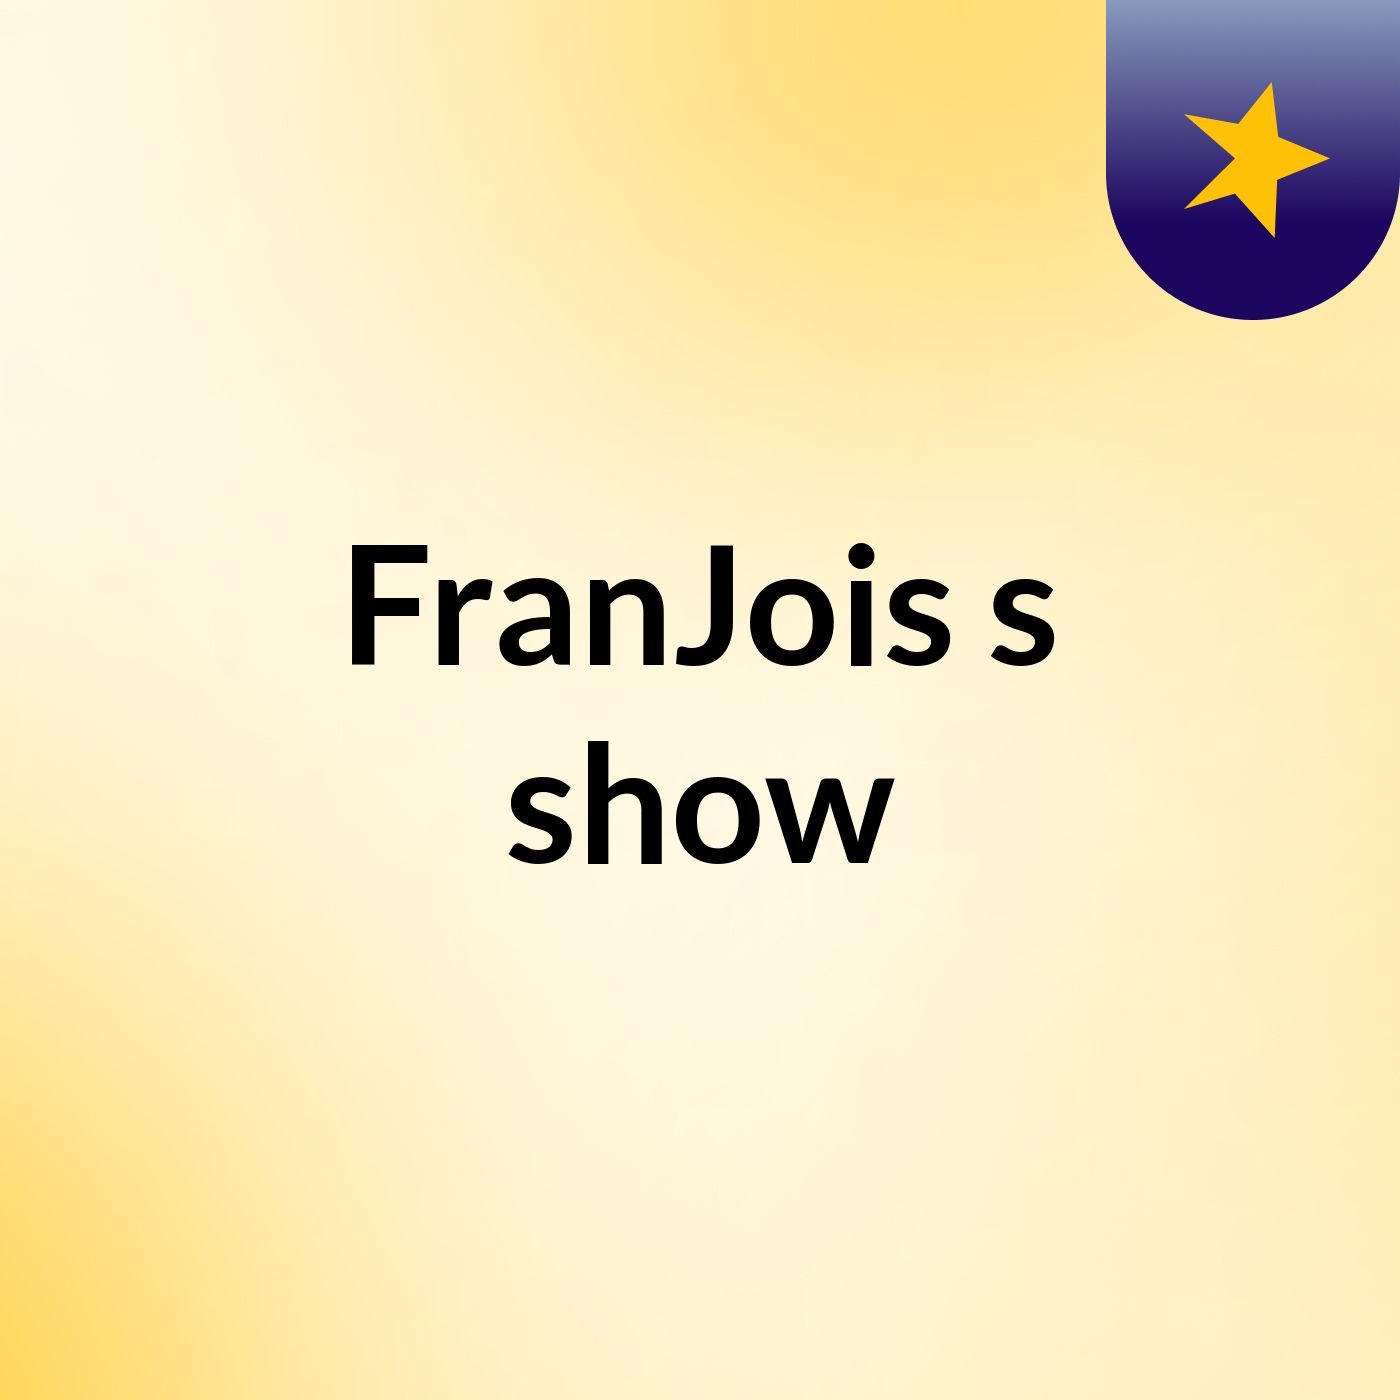 FranJois's show